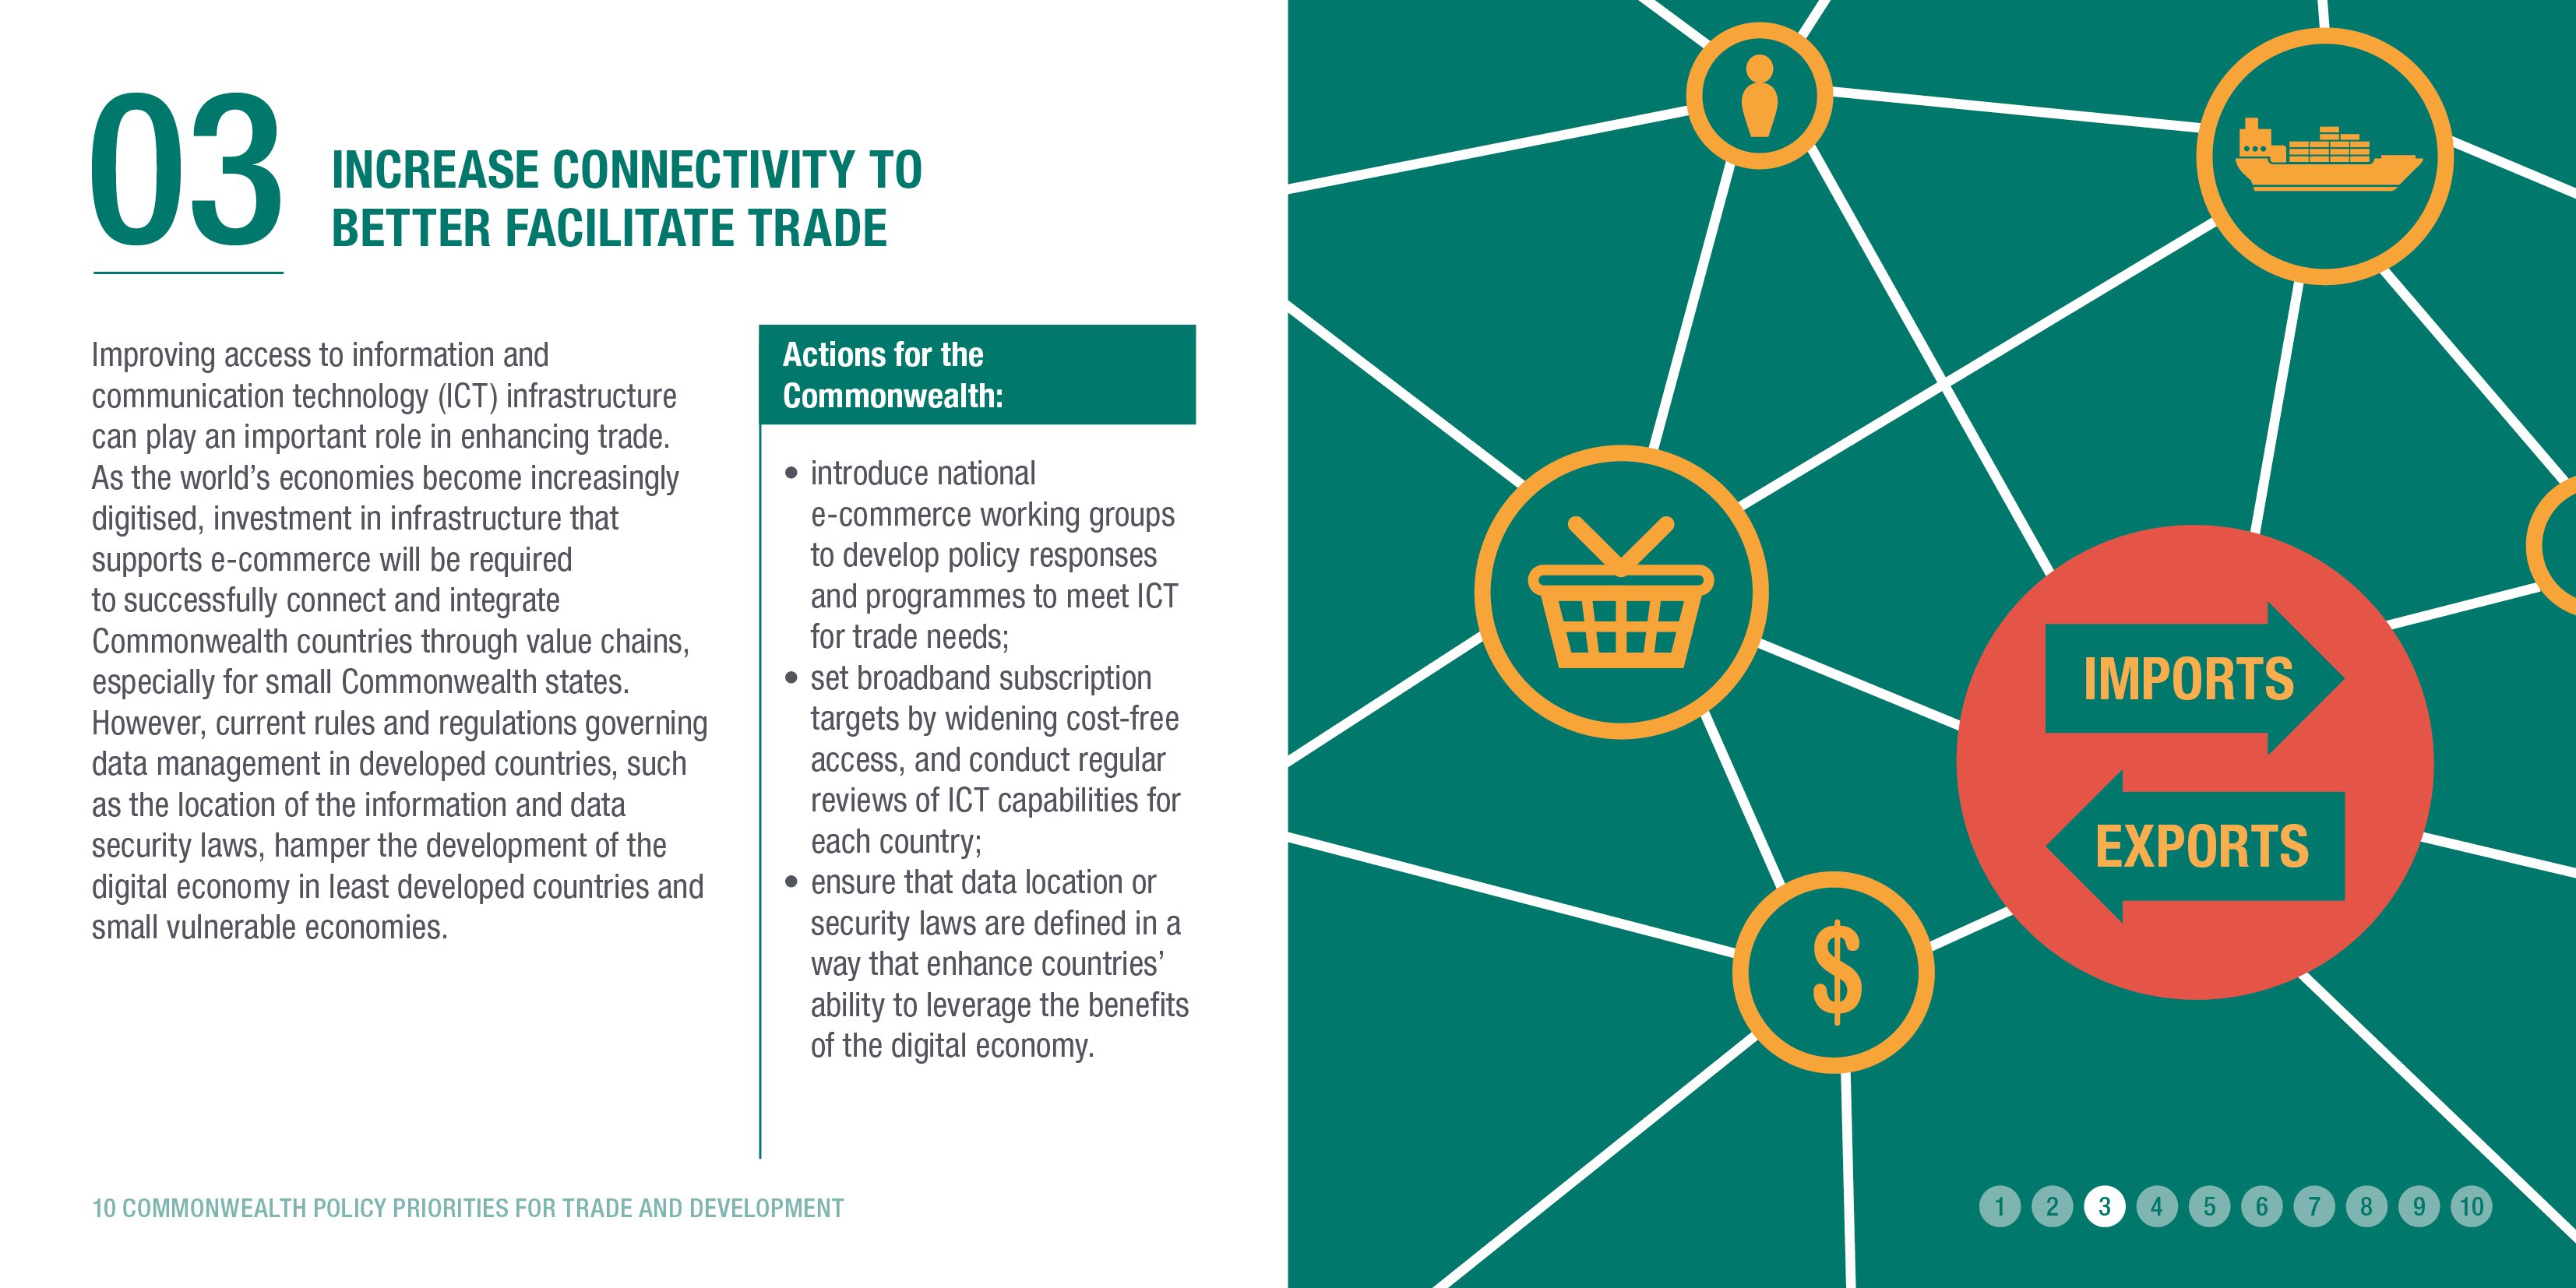 Increase connectivity to better facilitate trade